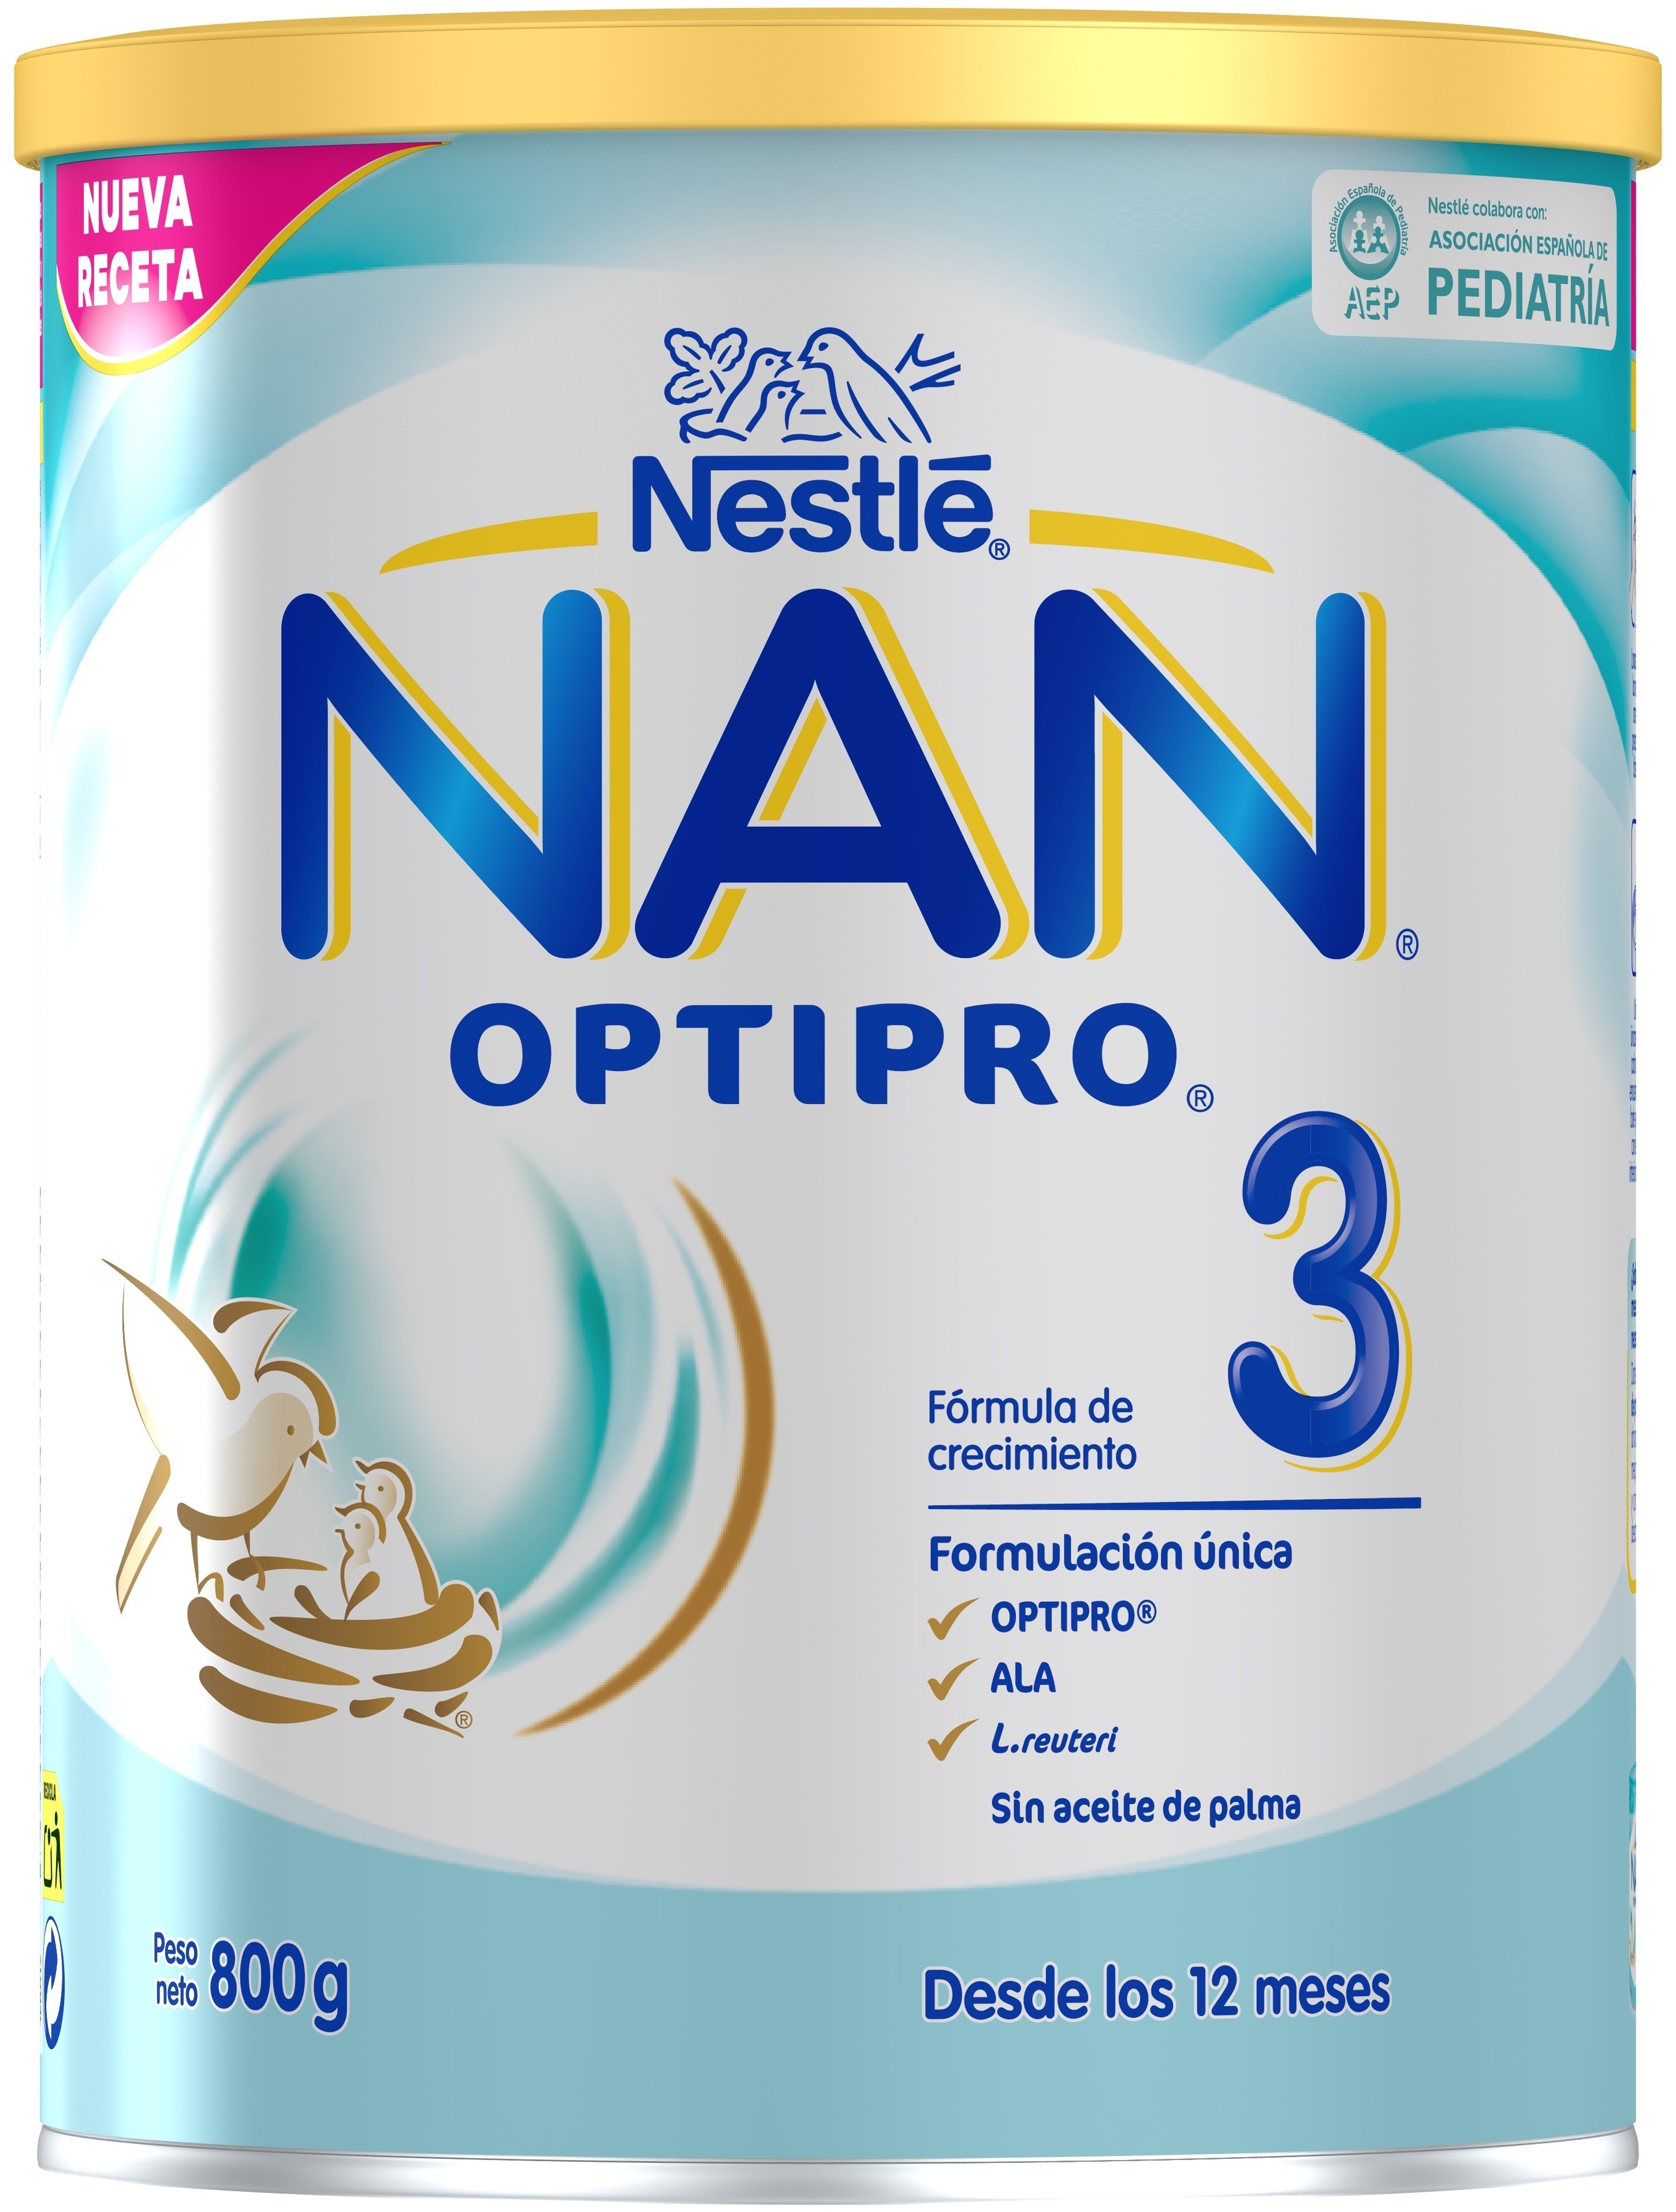 Nestle Nativa Crecimiento 3 Galleta (3 x 180ml)